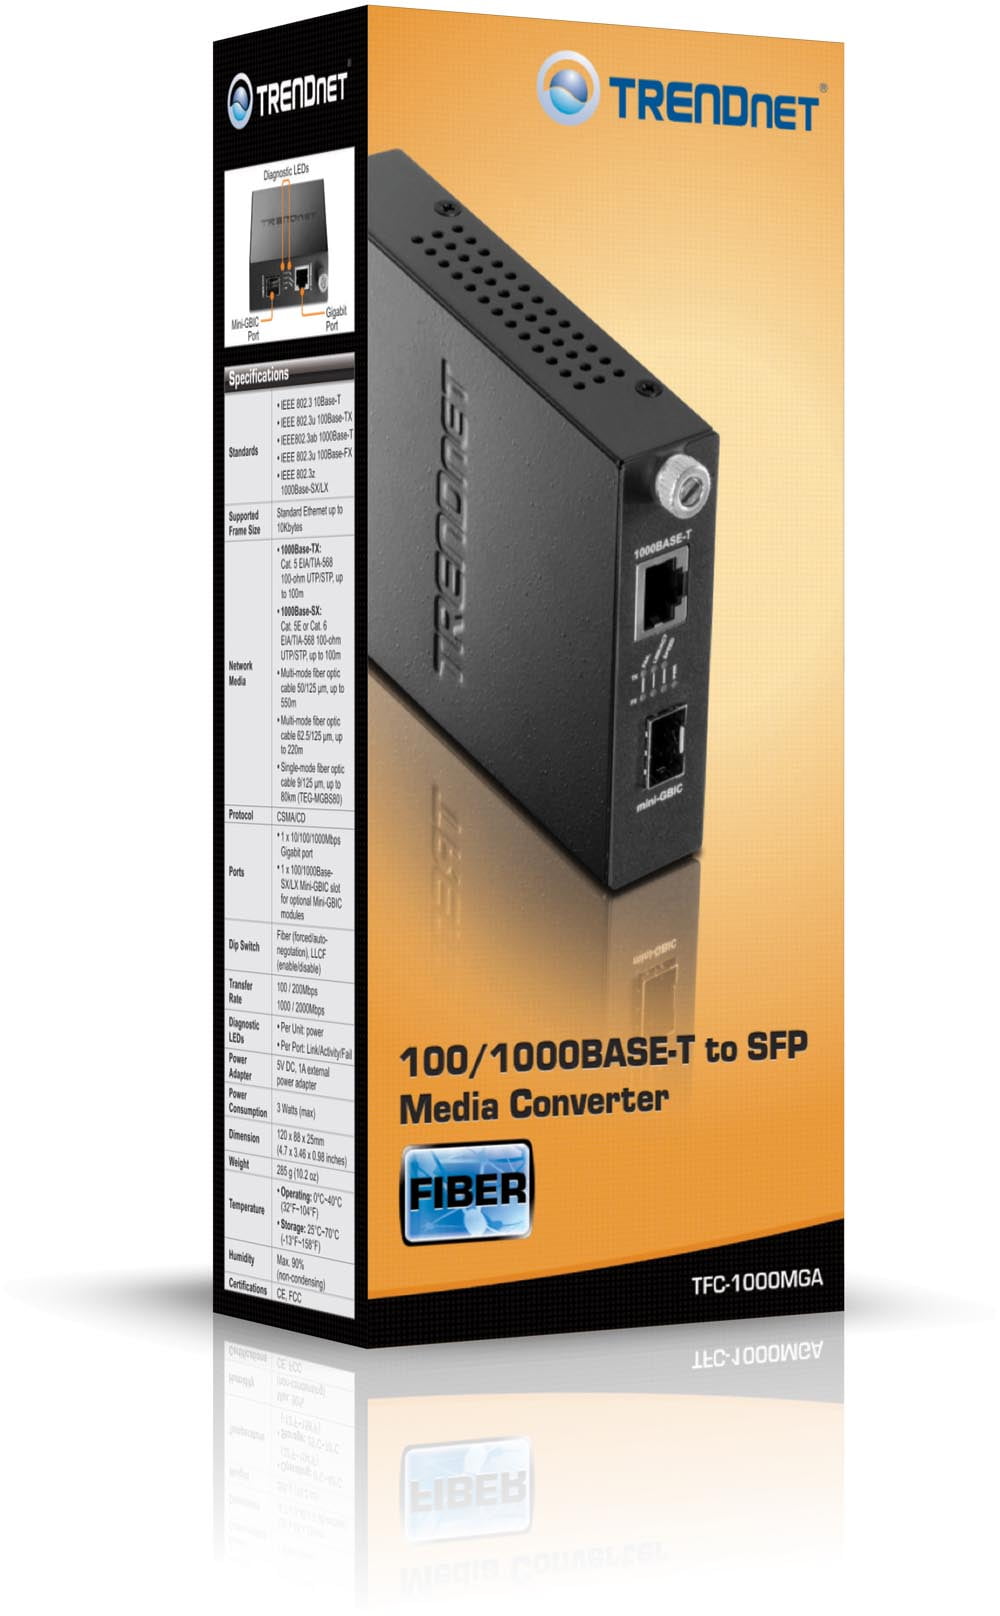 TRENDnet TFC-1000MGA Intelligent 100/1000Mbase-T to SFP Media Converter -  Walmart.com